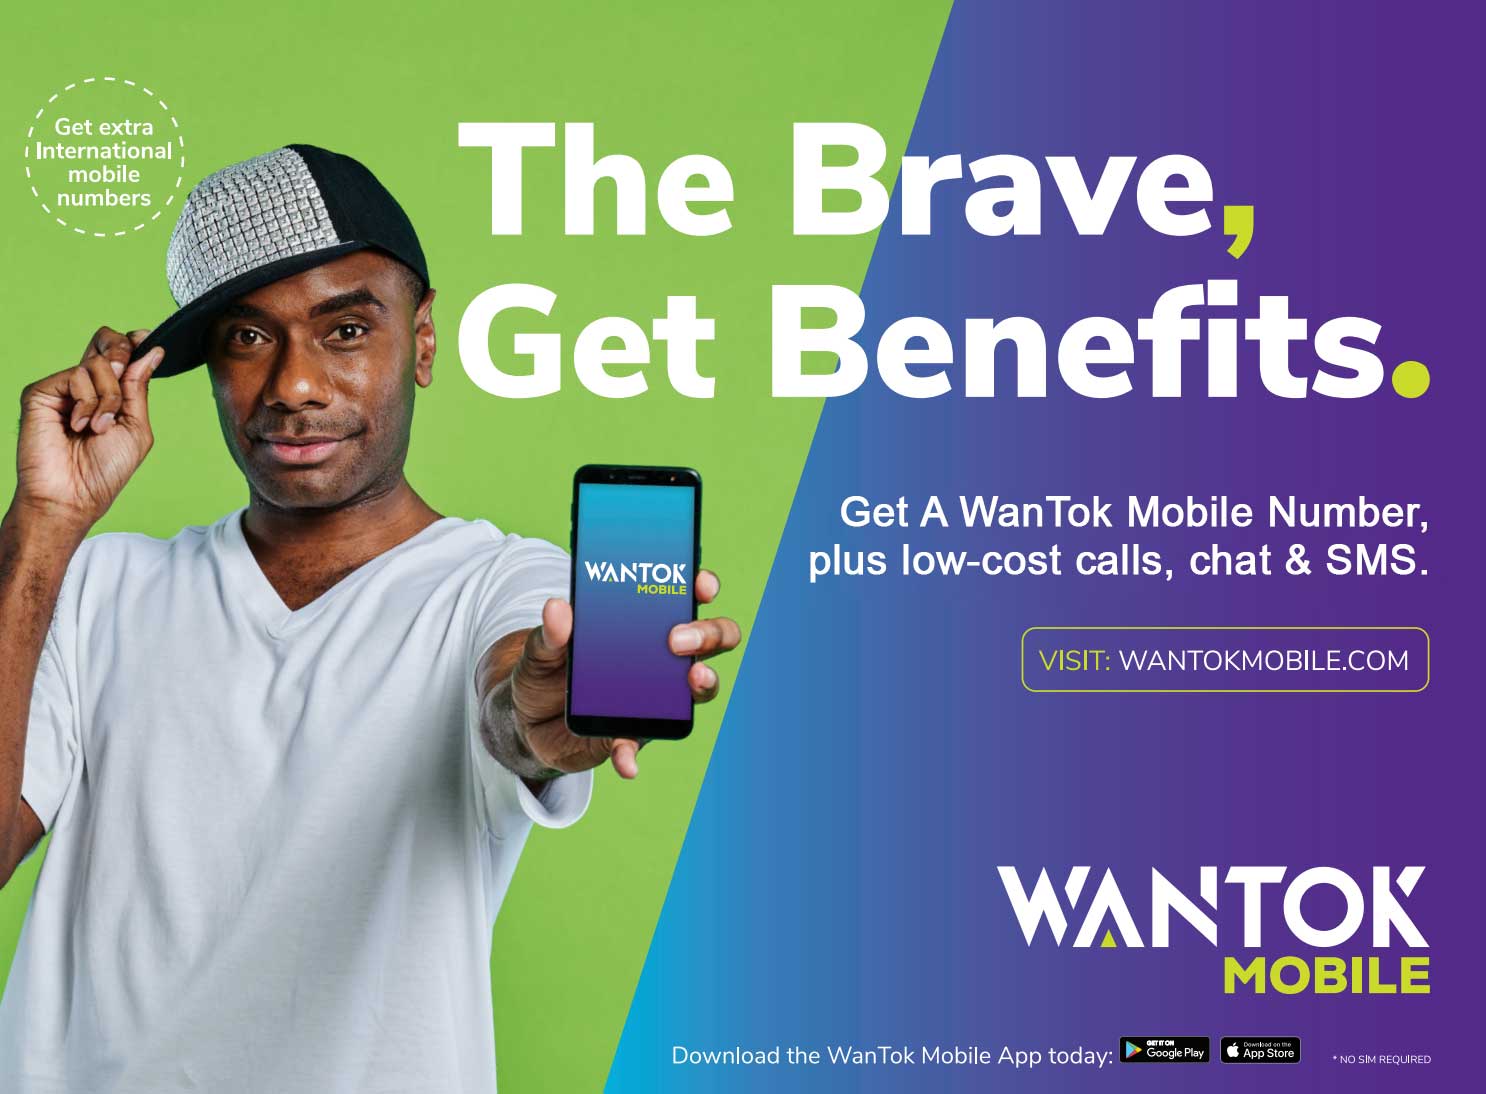 WanTok Mobile Services